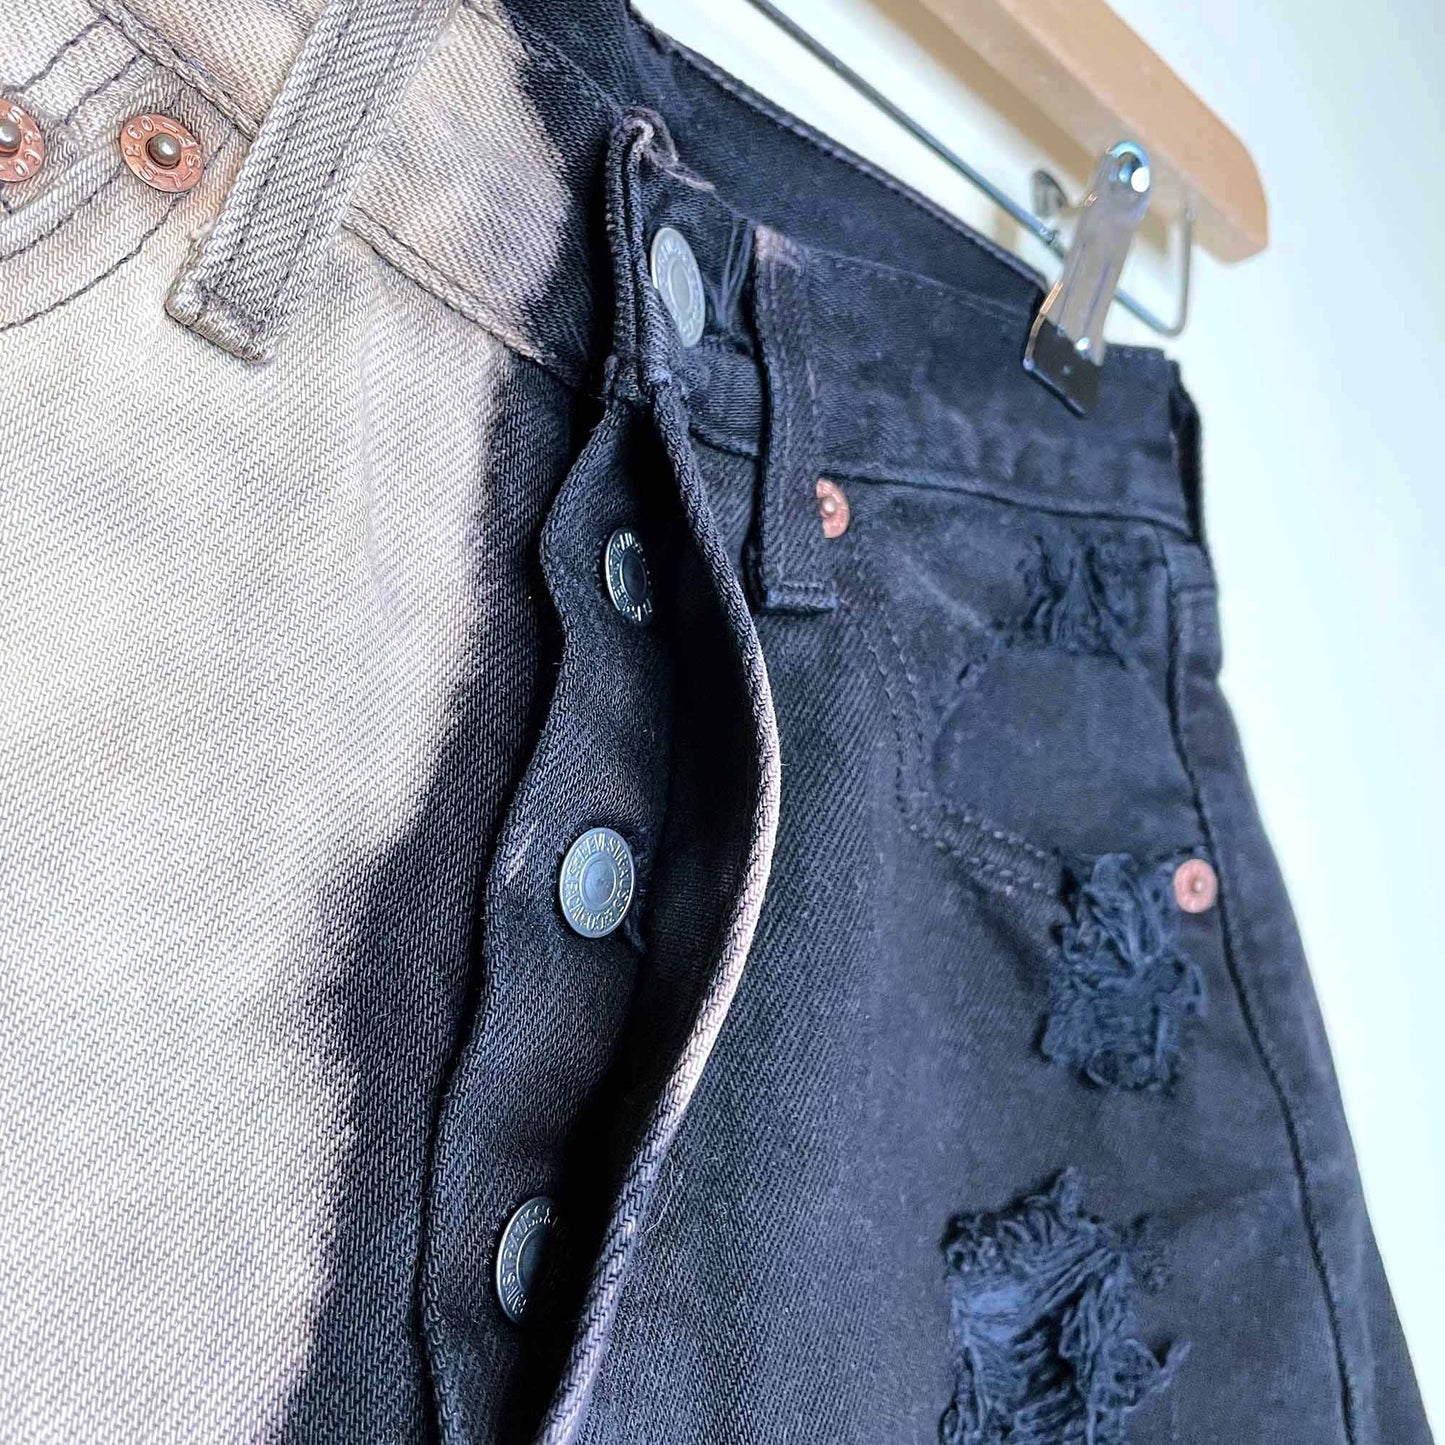 levi's 501 cut off bleach dye high rise jean shorts - size 24/25